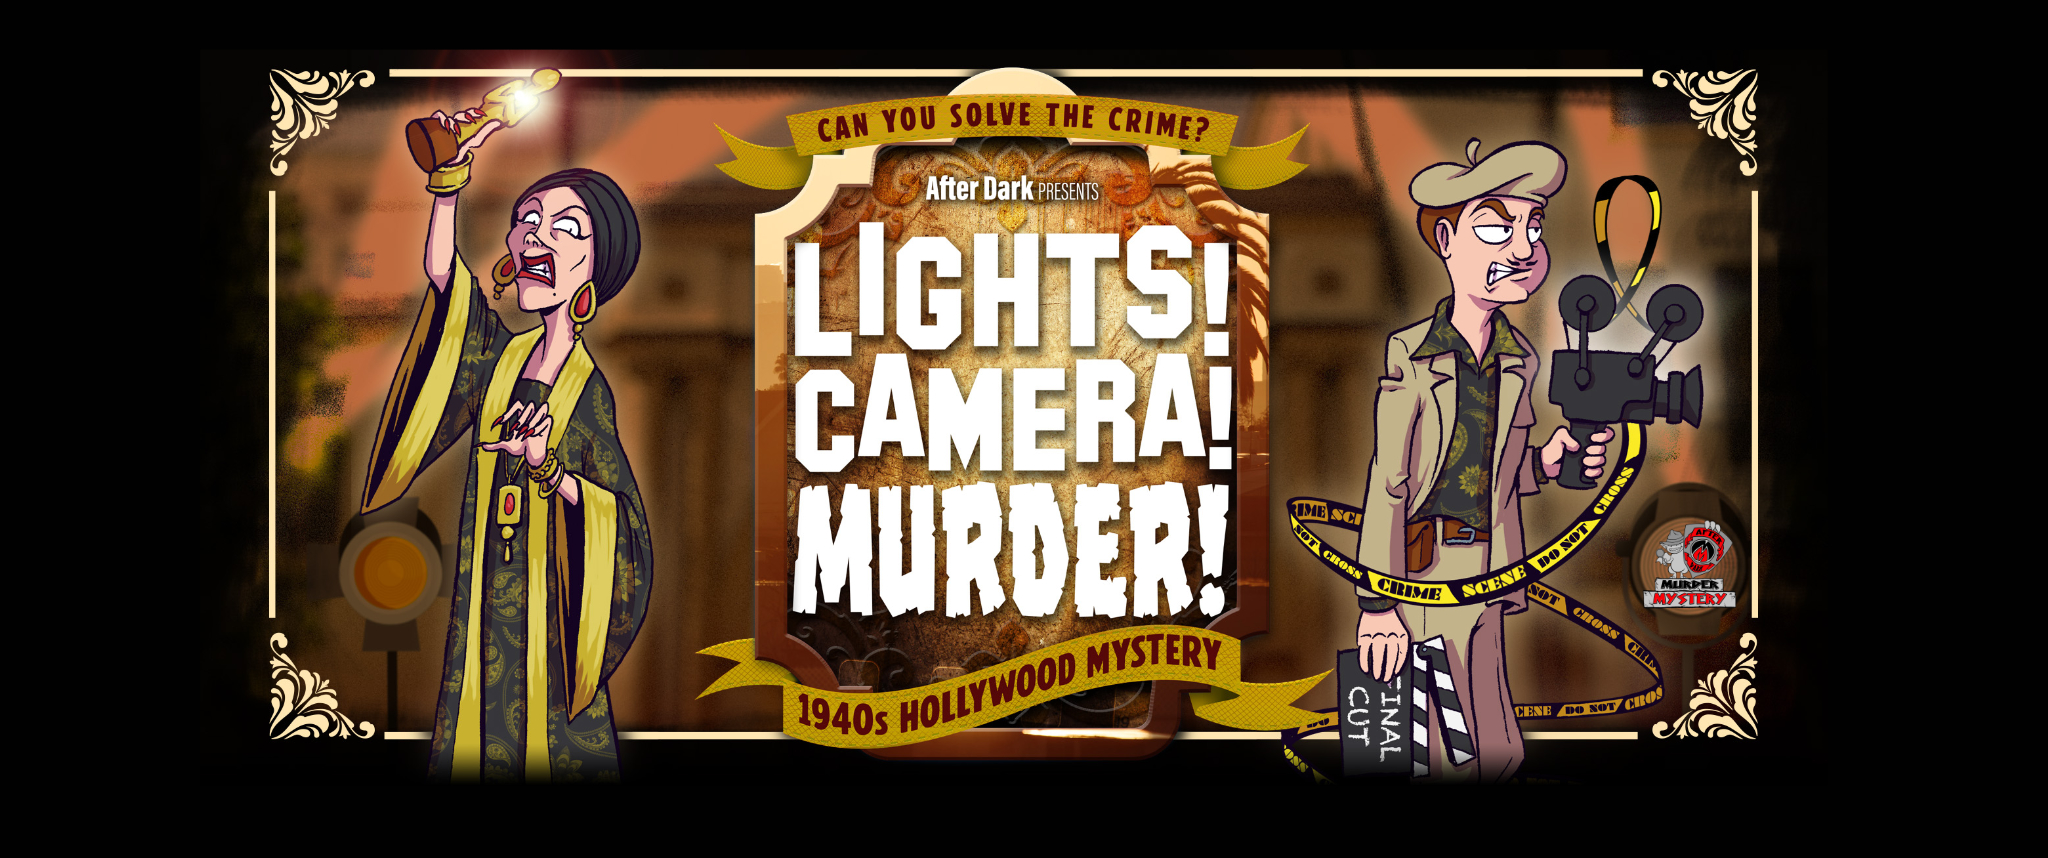 After Dark Murder Mystery Events: Lights, Camera, Murder!